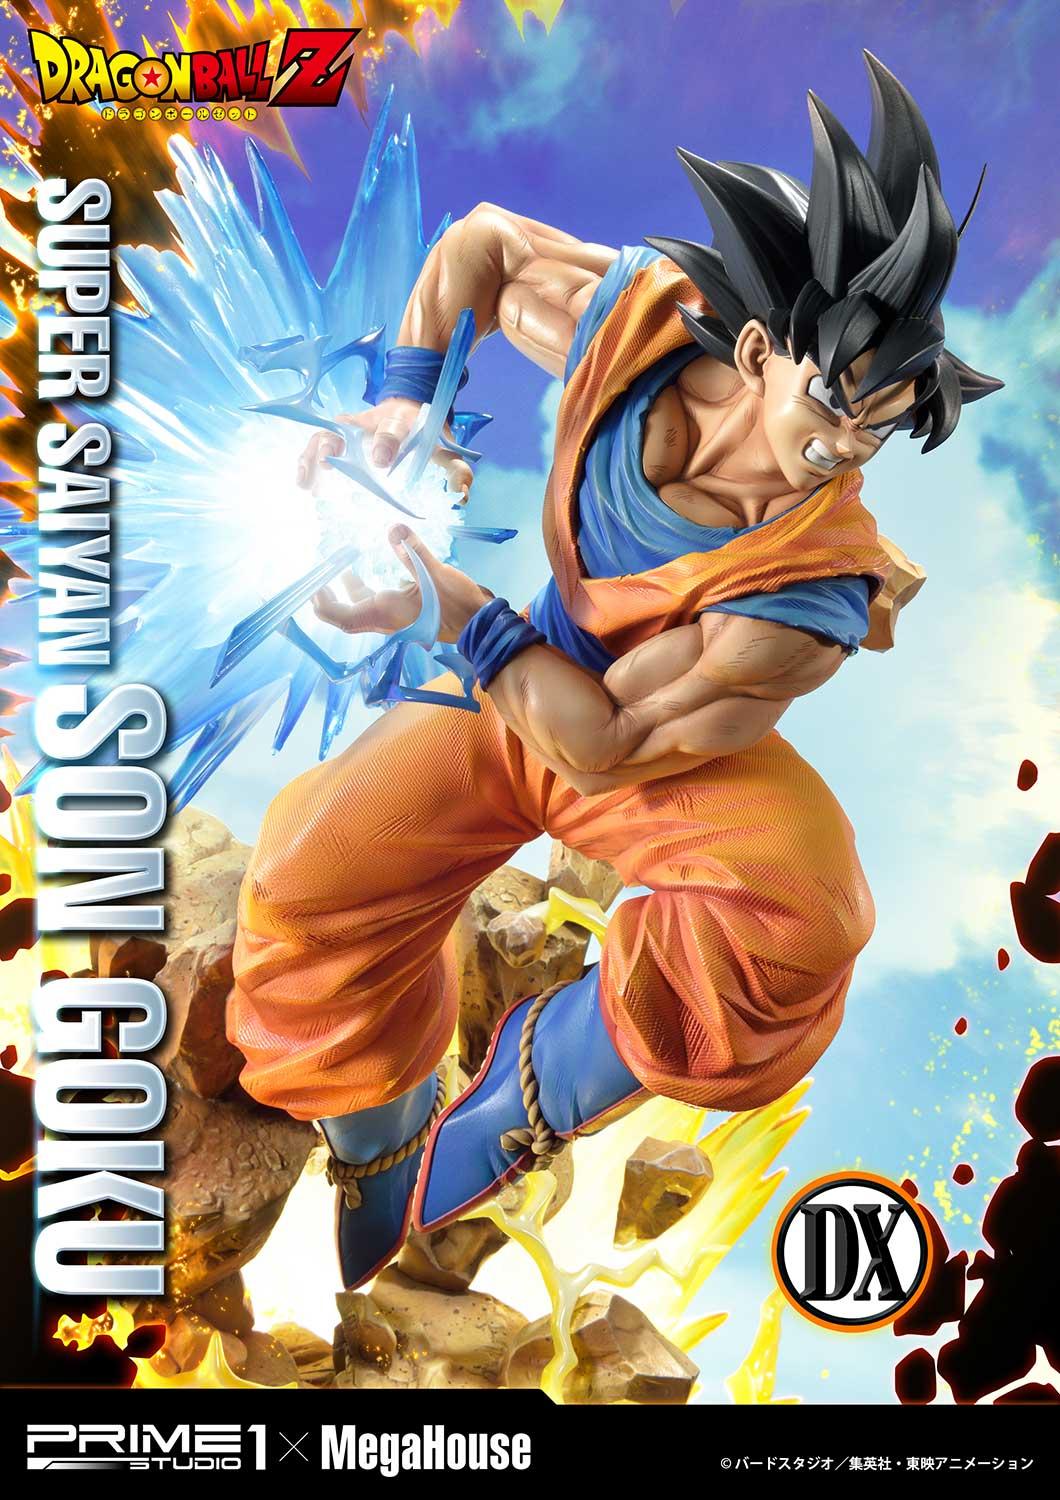 Son Goku SSJ Dragon Ball Z Mega Premium Masterline Prime 1 Studio